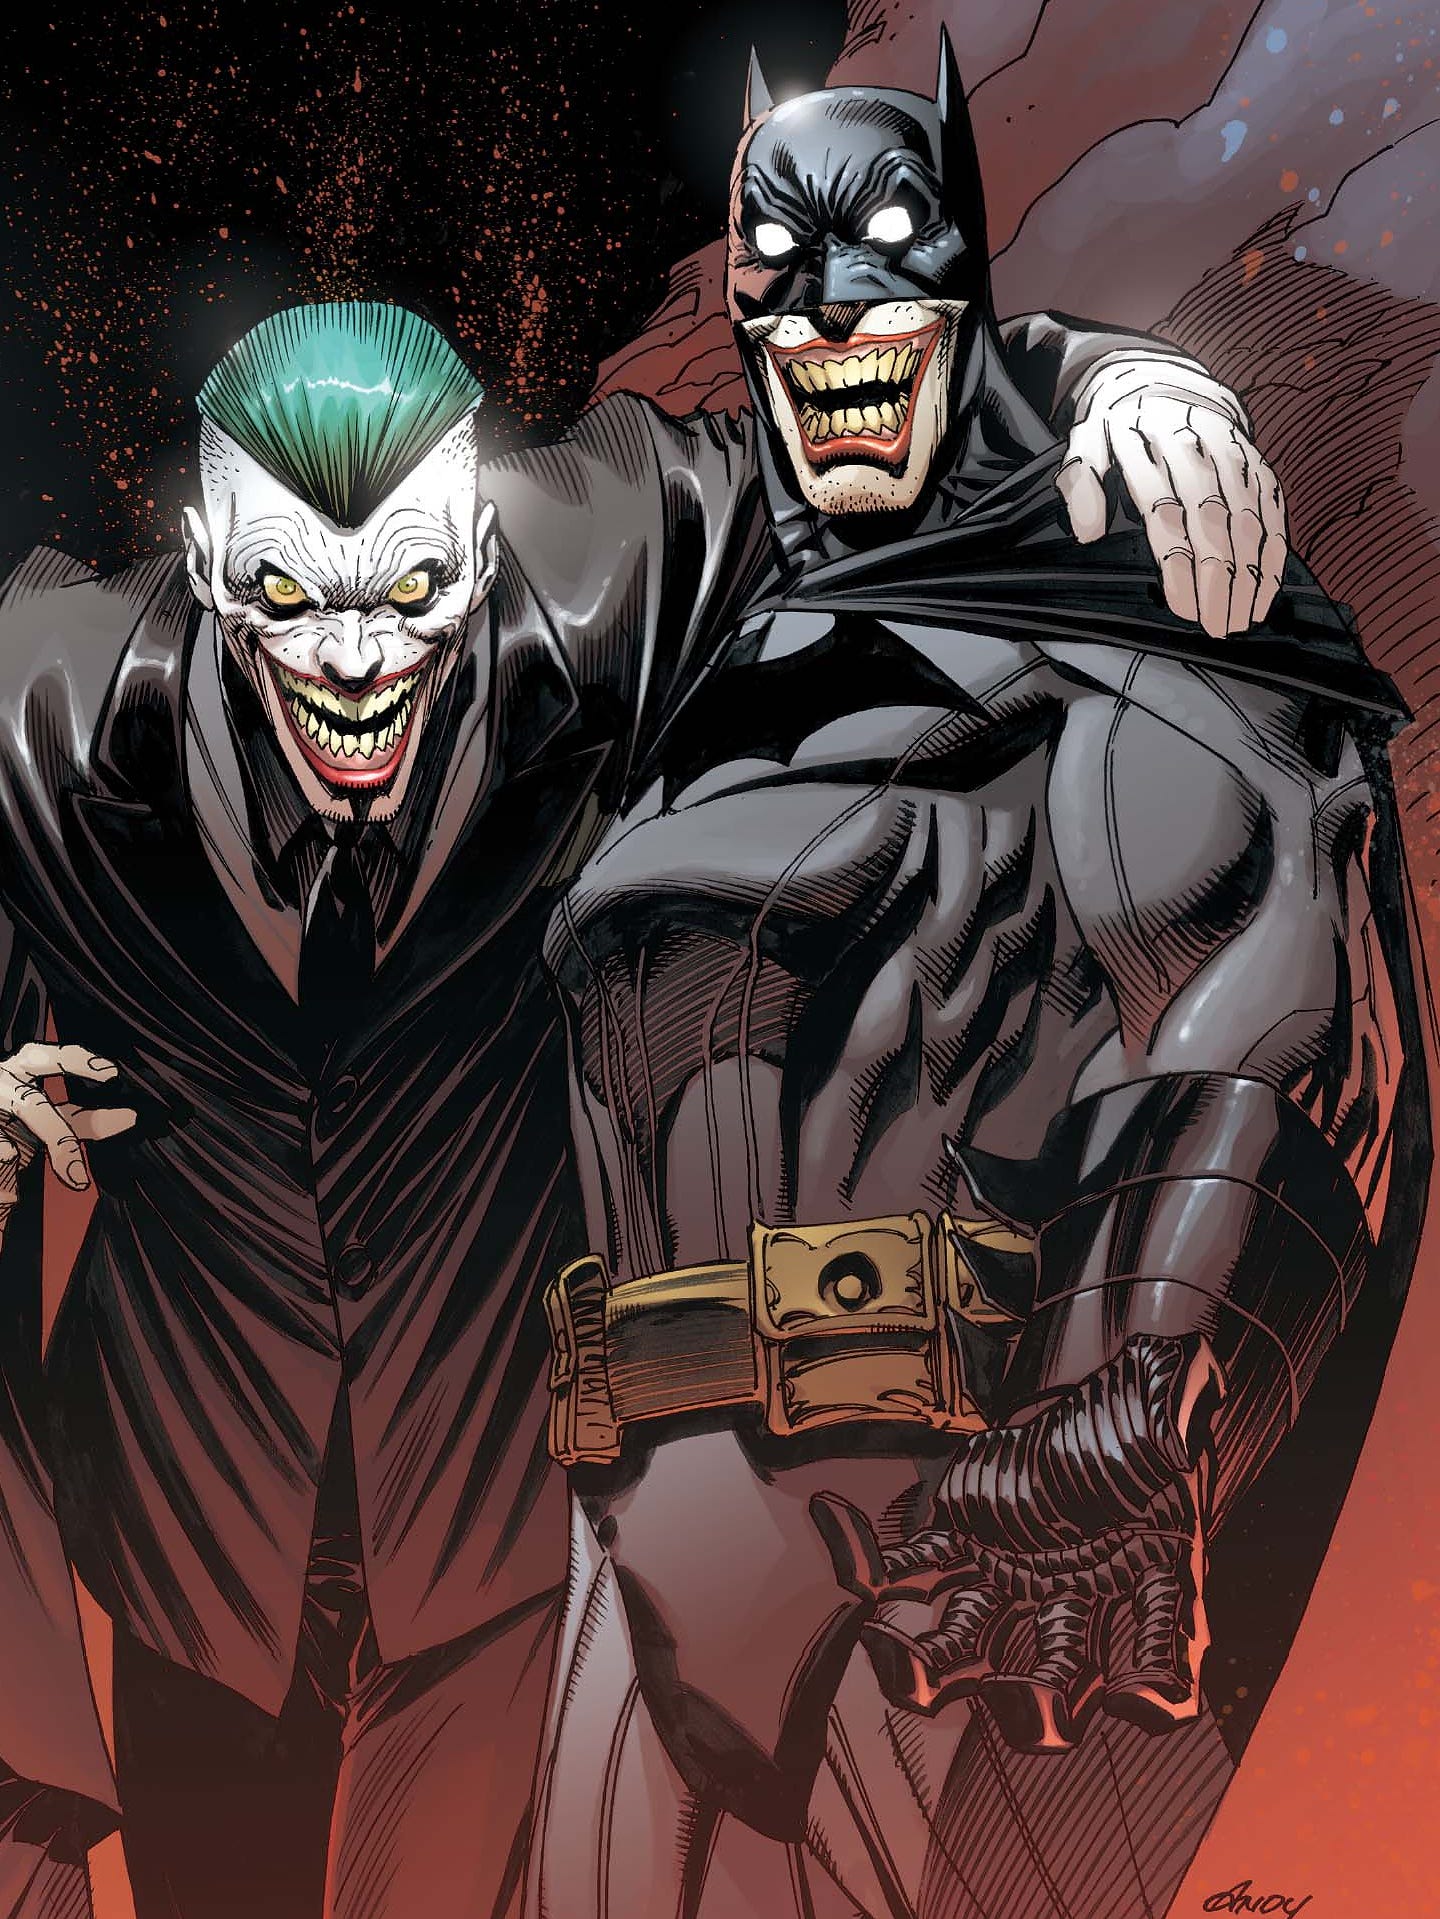 Batman, Joker in fatal 'Endgame'